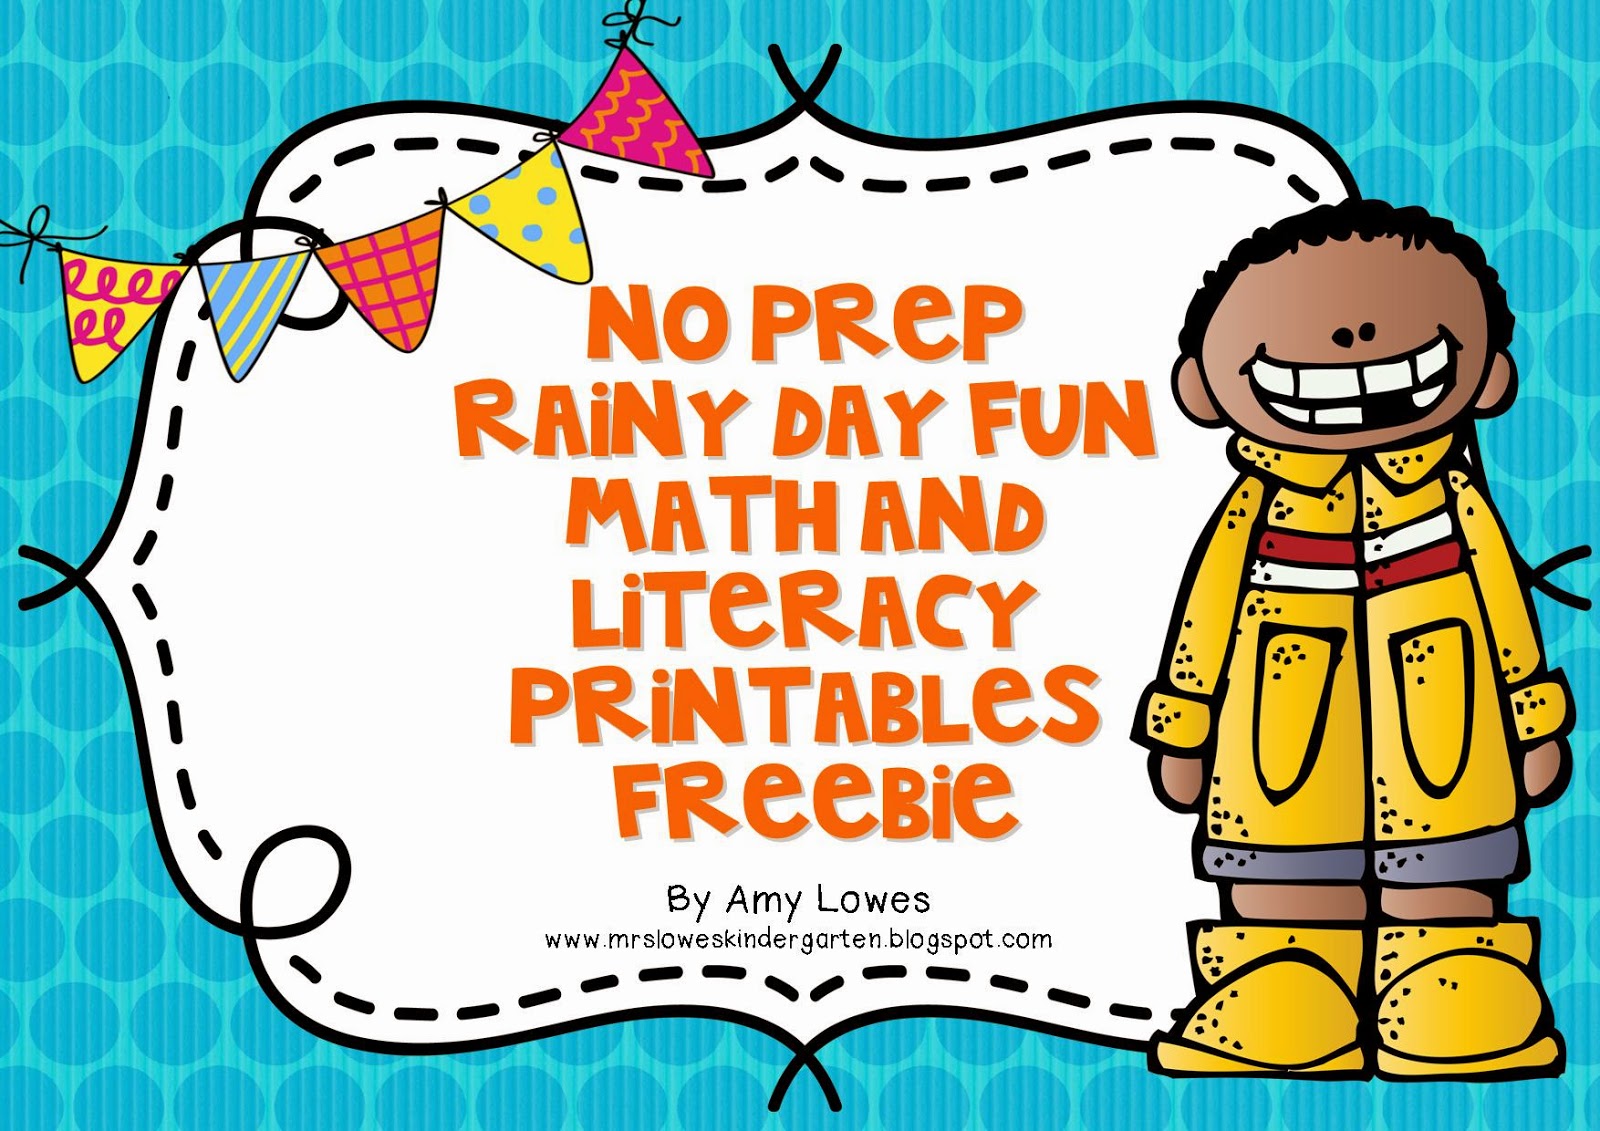 http://www.teacherspayteachers.com/Product/No-Prep-Rainy-Day-Fun-Math-and-Literacy-Printables-FREEBIE-1176746